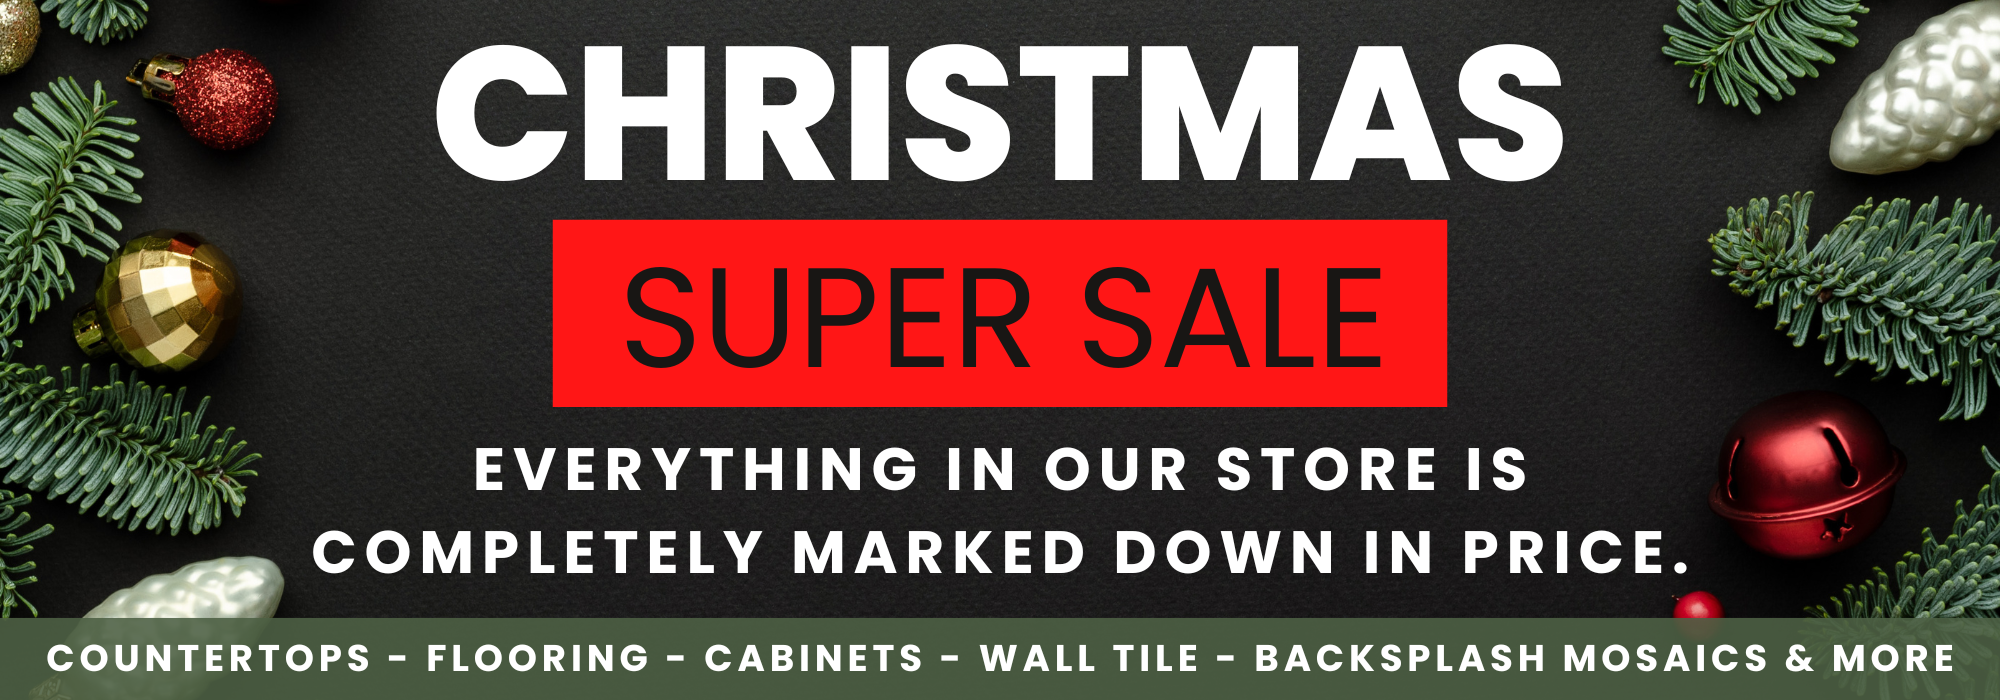 Copy of Christmas Super Sale